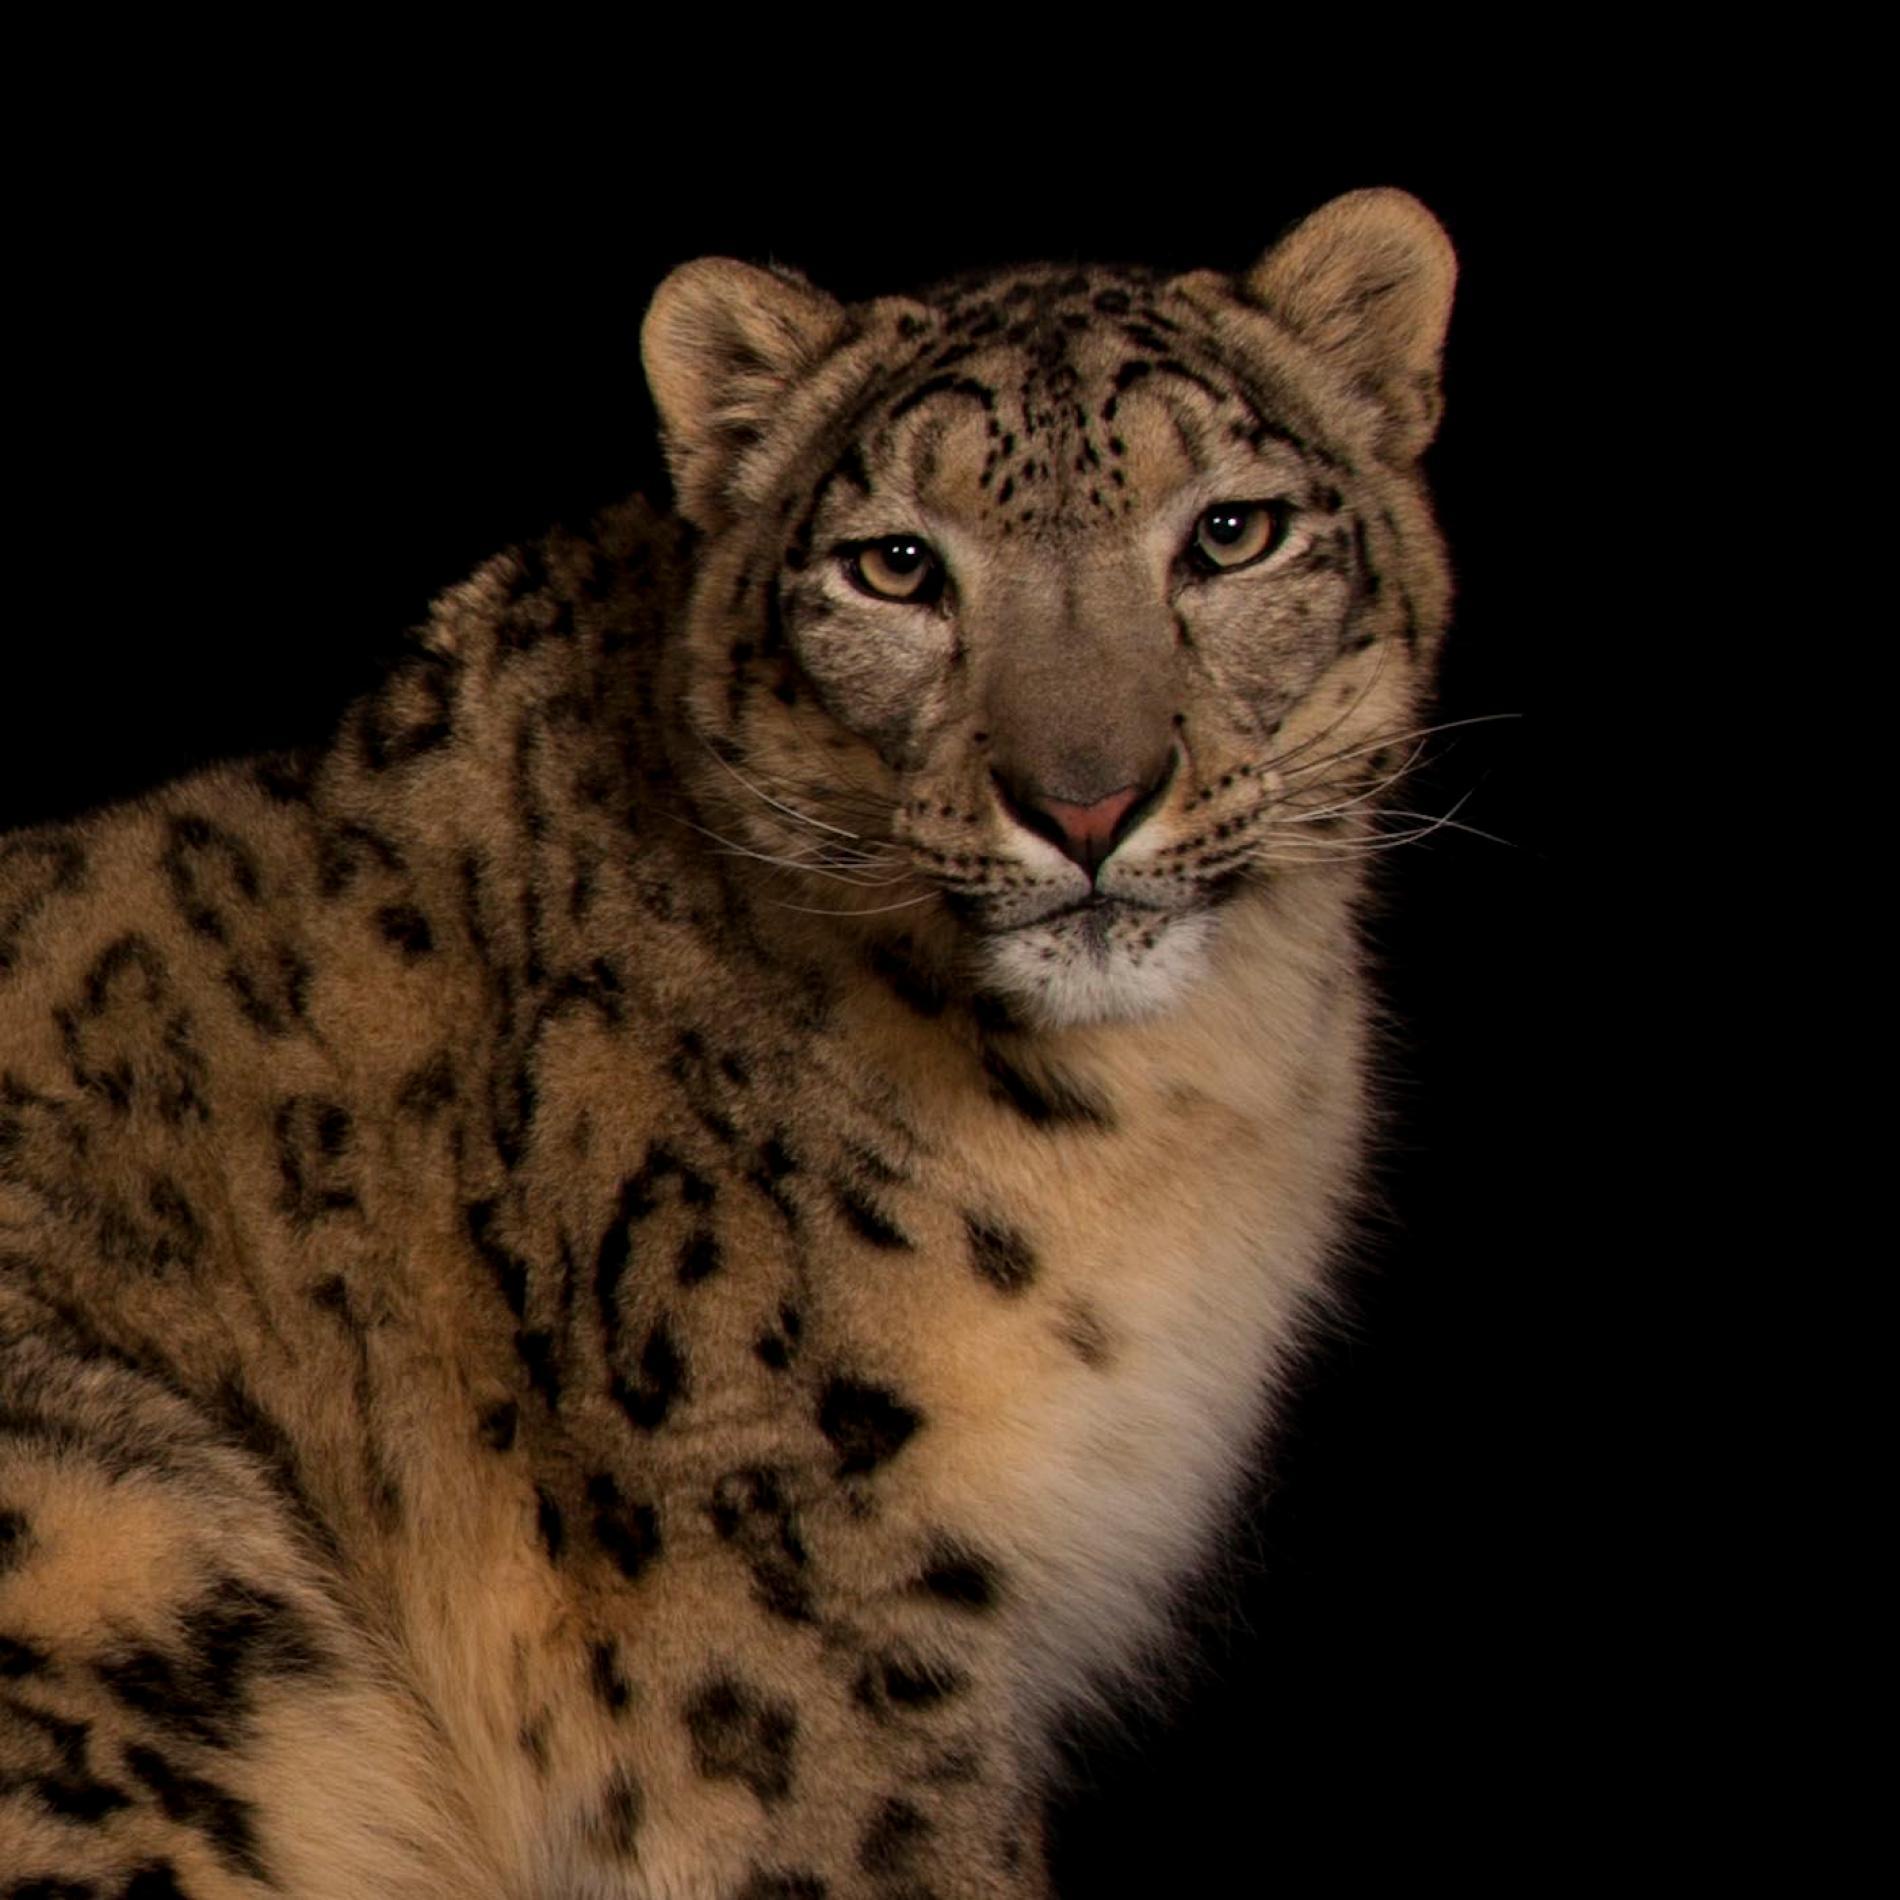 Animal Snow Leopard wallpaper (Desktop, Phone, Tablet)